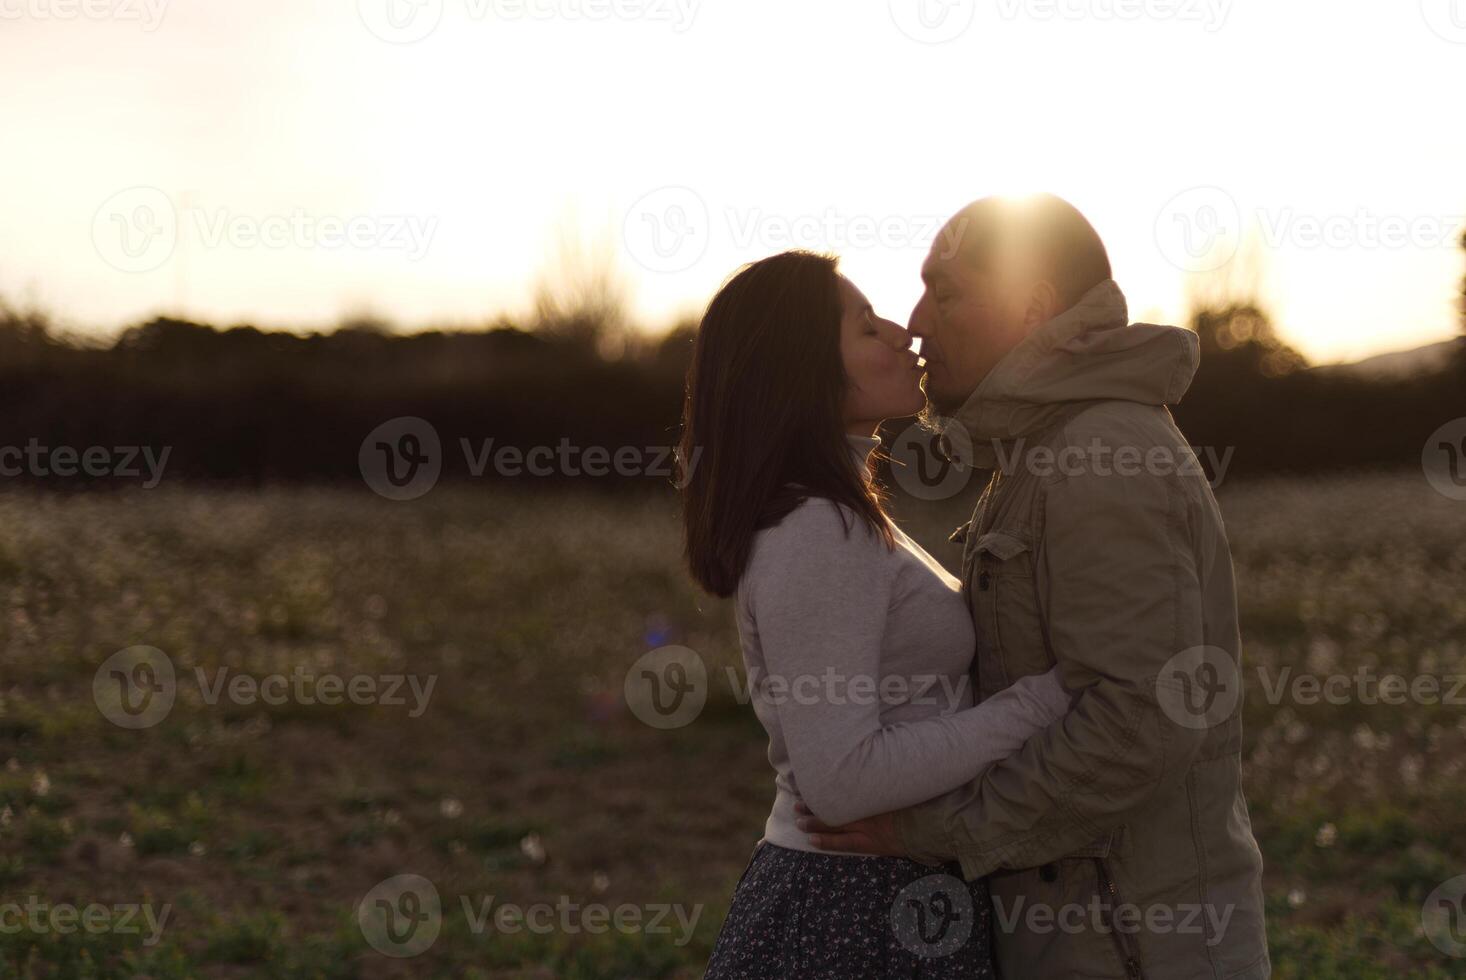 A man hugs and kisses his girlfriend at sunset in a natural environment. photo